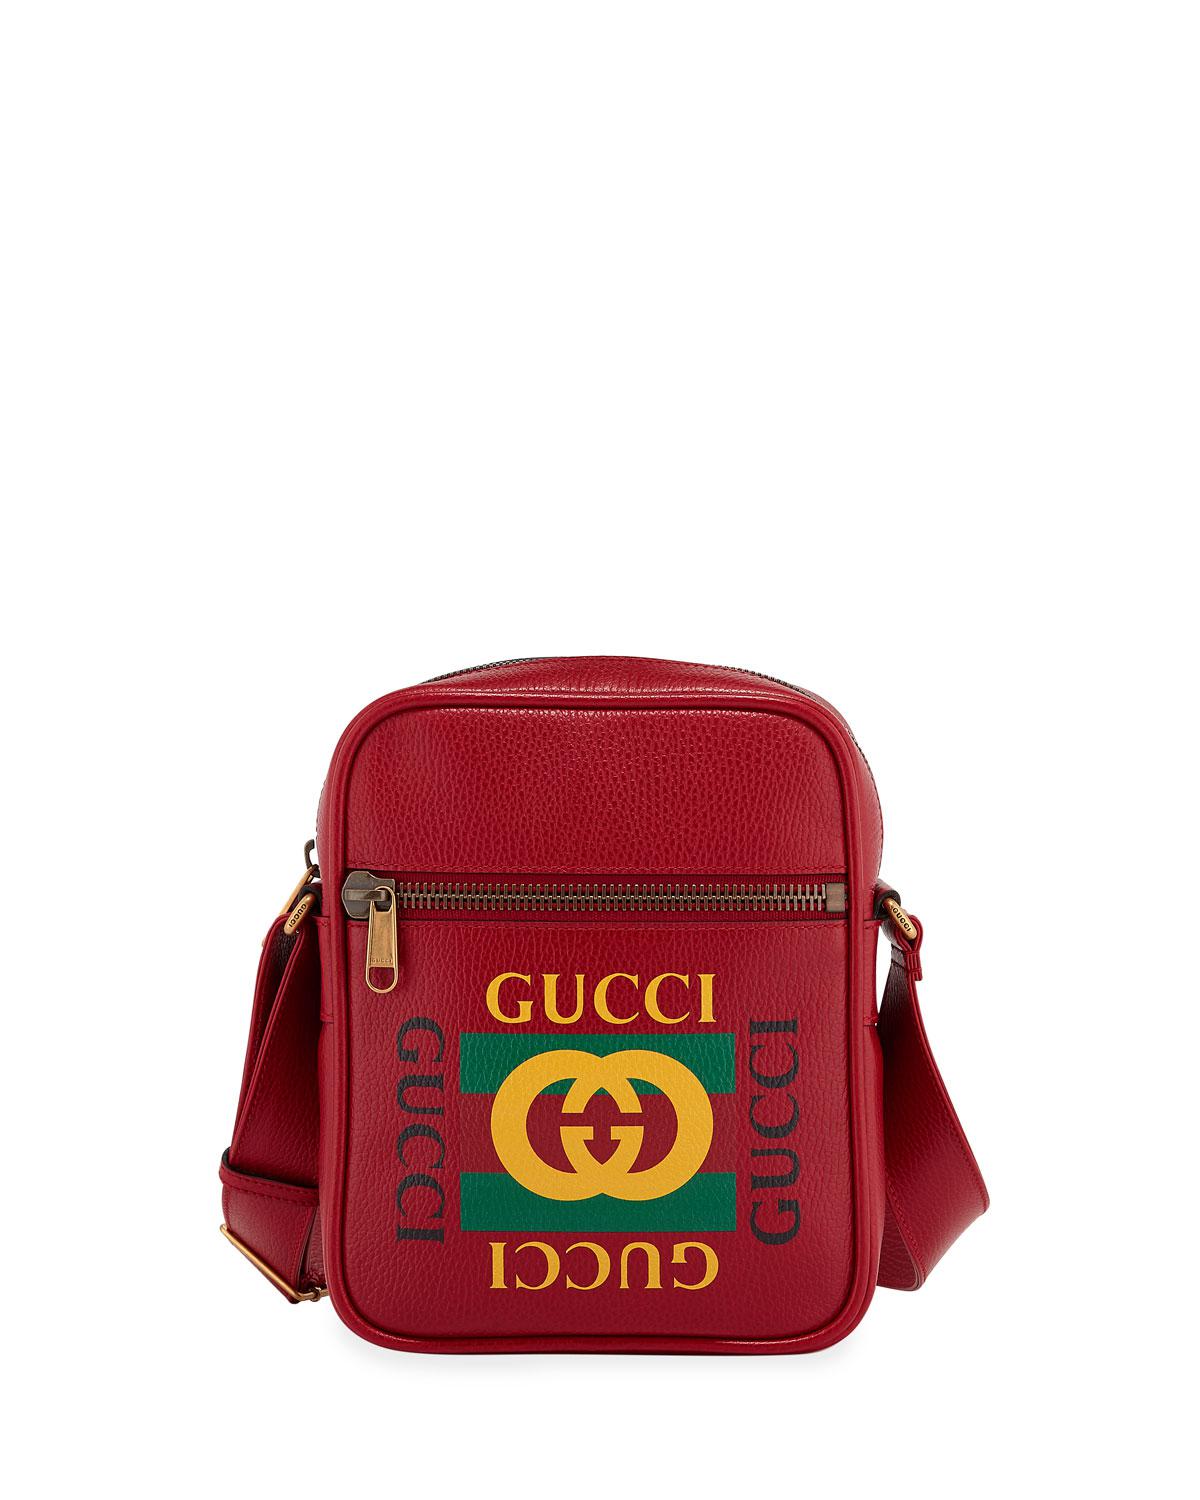 Gucci Bag Malaysia Price List :: Keweenaw Bay Indian Community